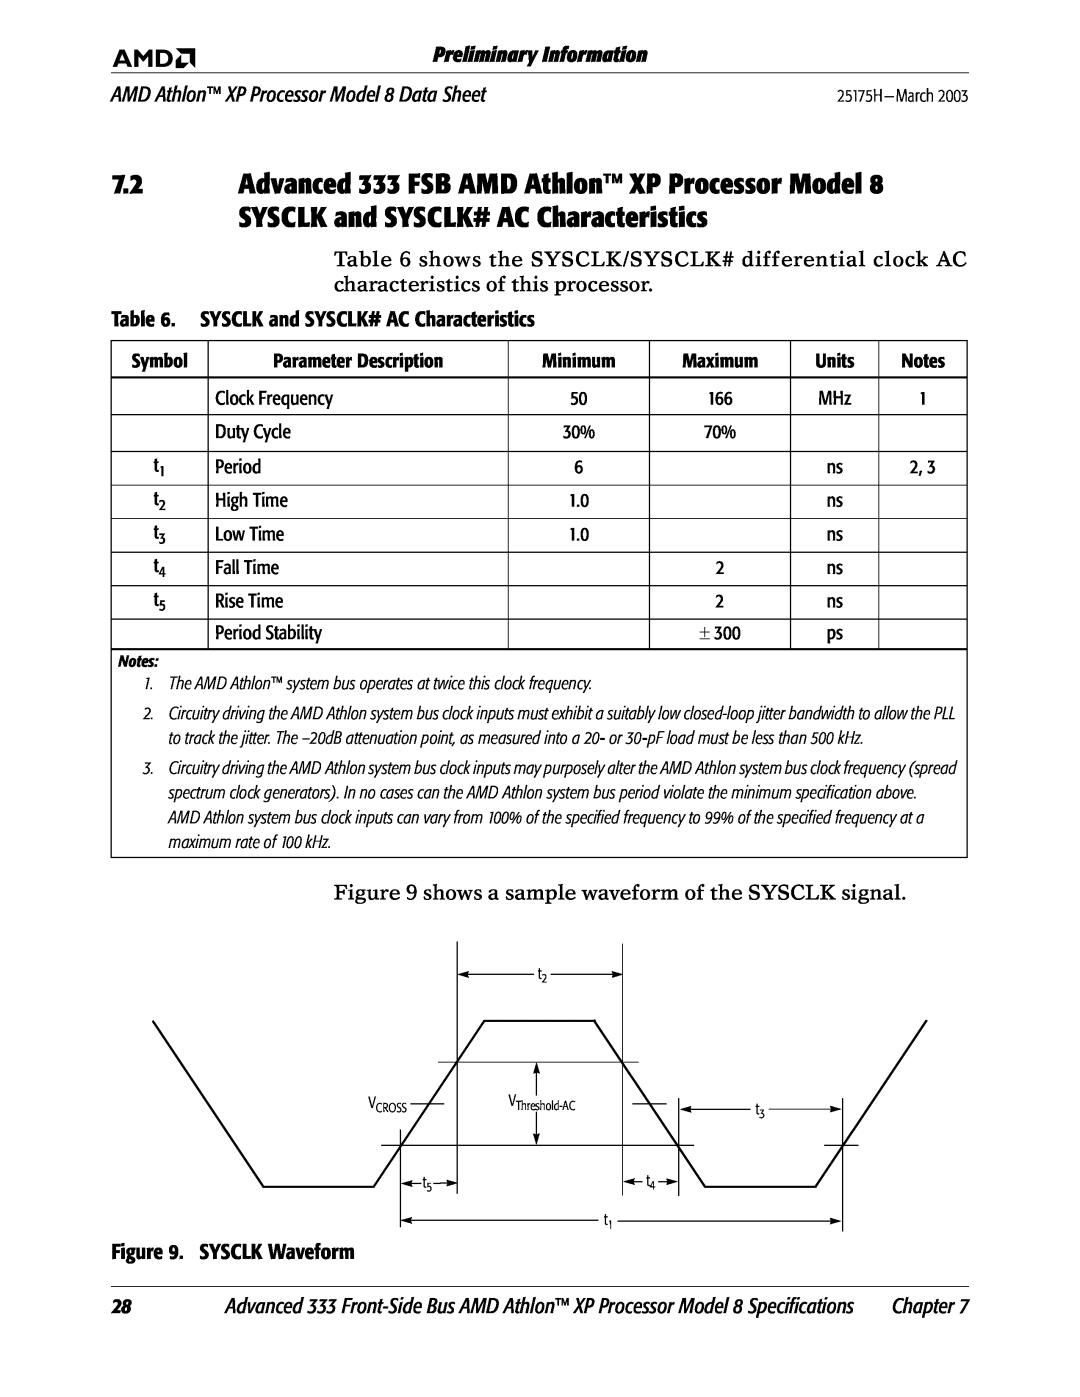 AMD manual SYSCLK Waveform, Preliminary Information, AMD Athlon XP Processor Model 8 Data Sheet 